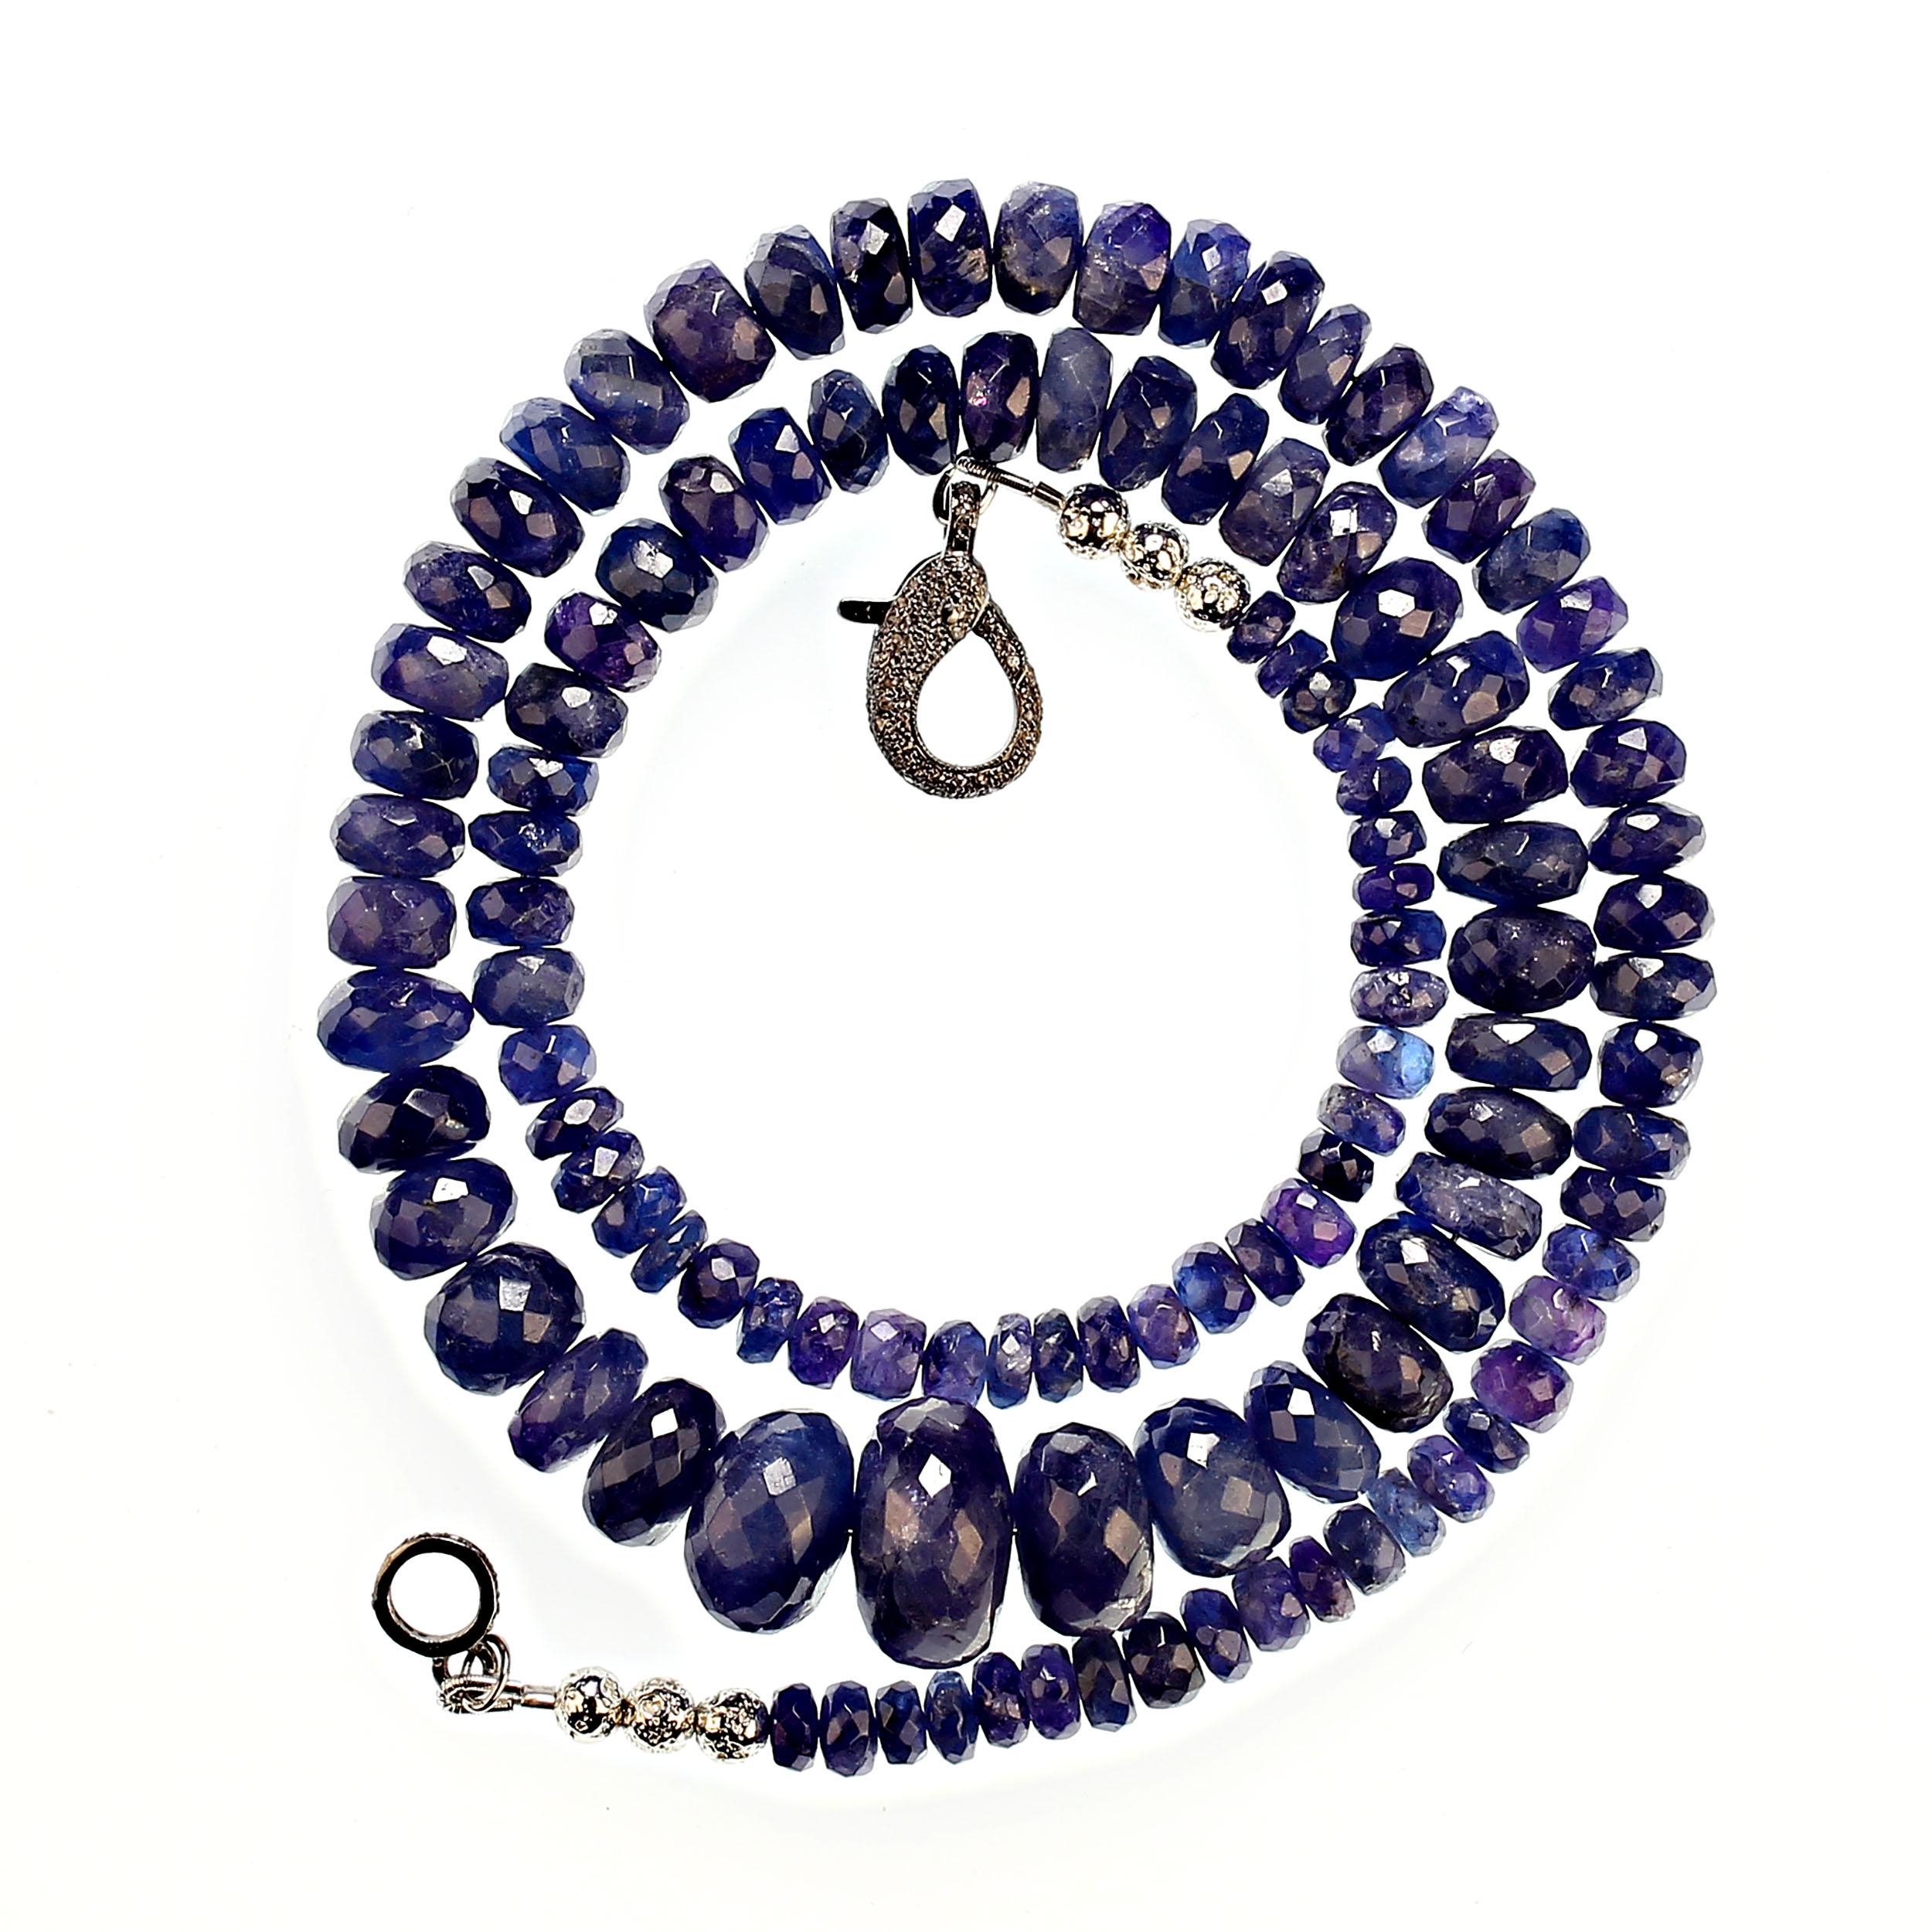 Terrific Tanzanite necklace graduated 23 inch purple/blue rondelles Great Gift! For Sale 1